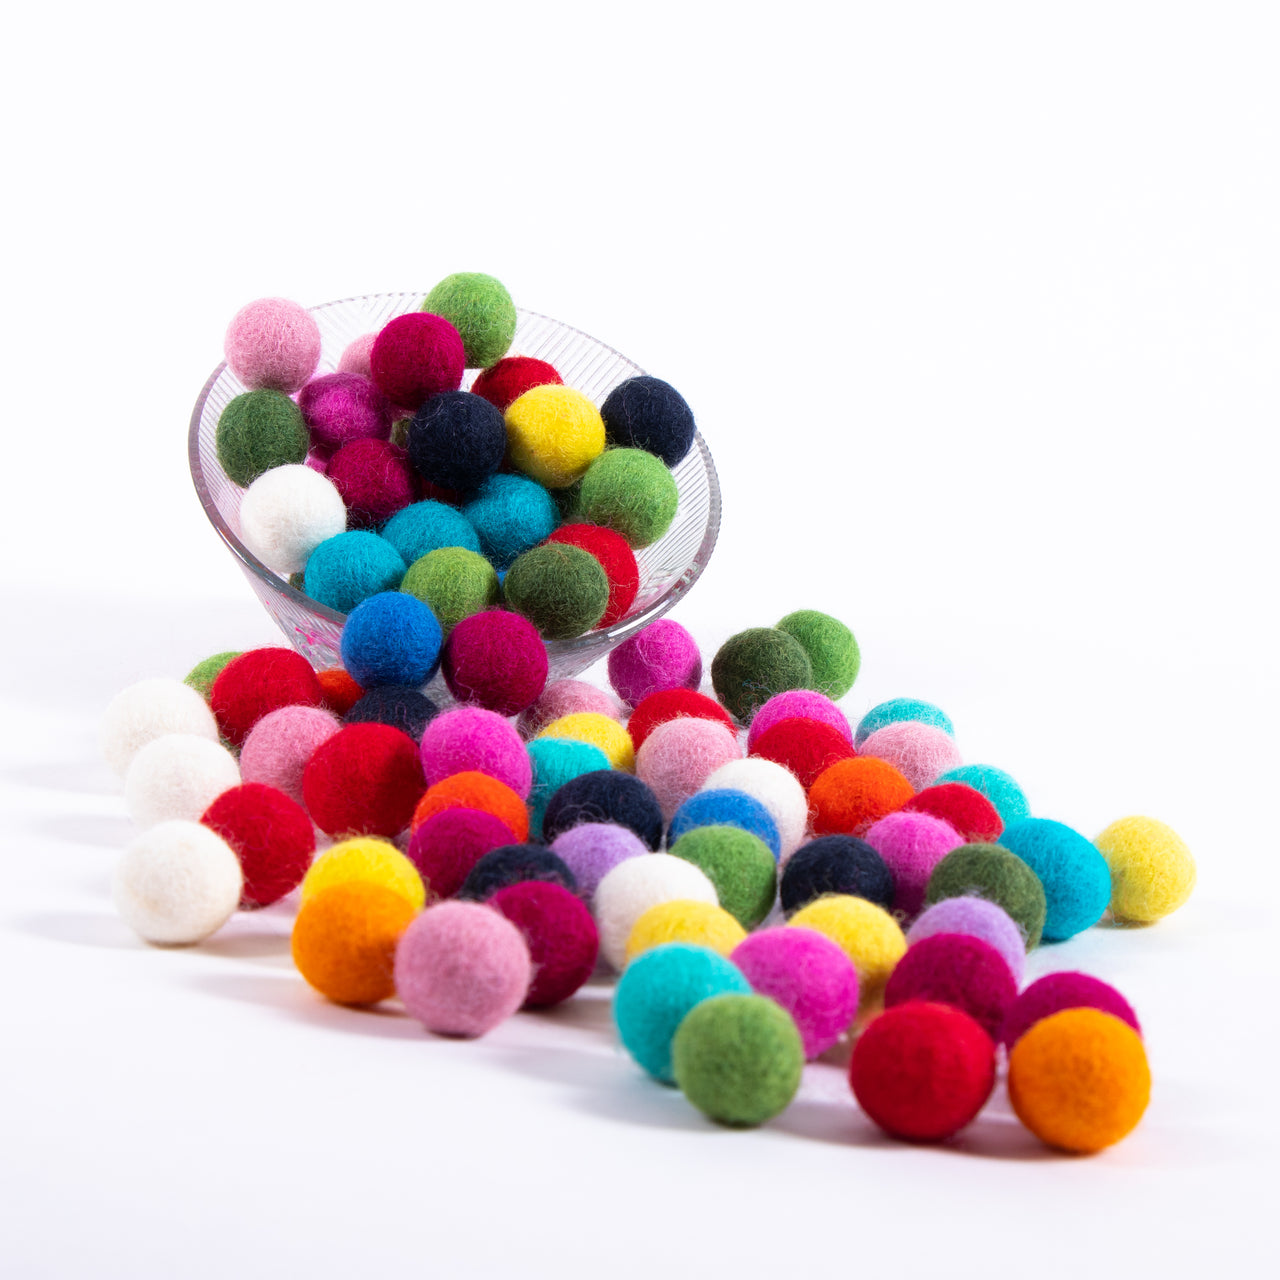 1.5cm Wholesale Felt Balls [100 Colors] - Felt & Yarn